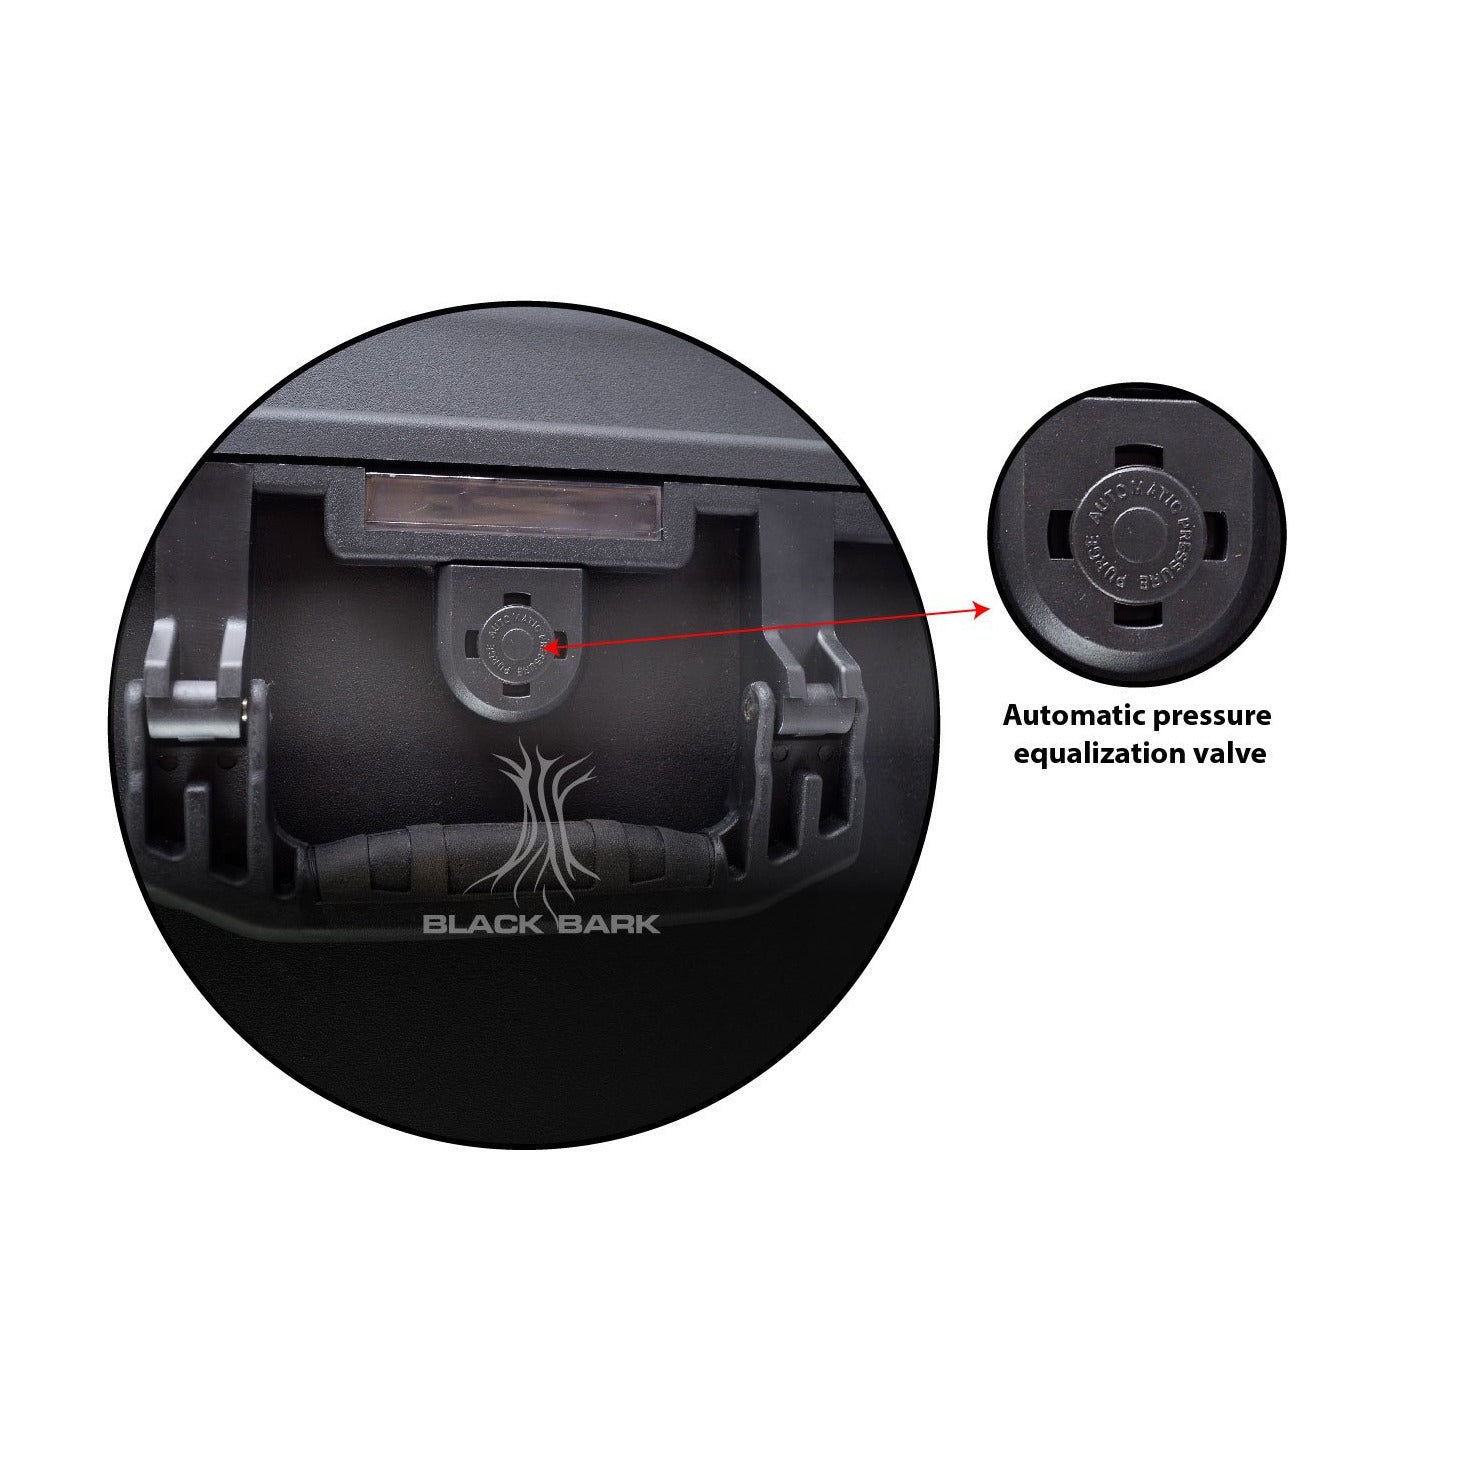 Black Bark Compact Series black BB0838 ; Camera case ; dustproof ; shockproof storage with foam ; waterproof hard carry